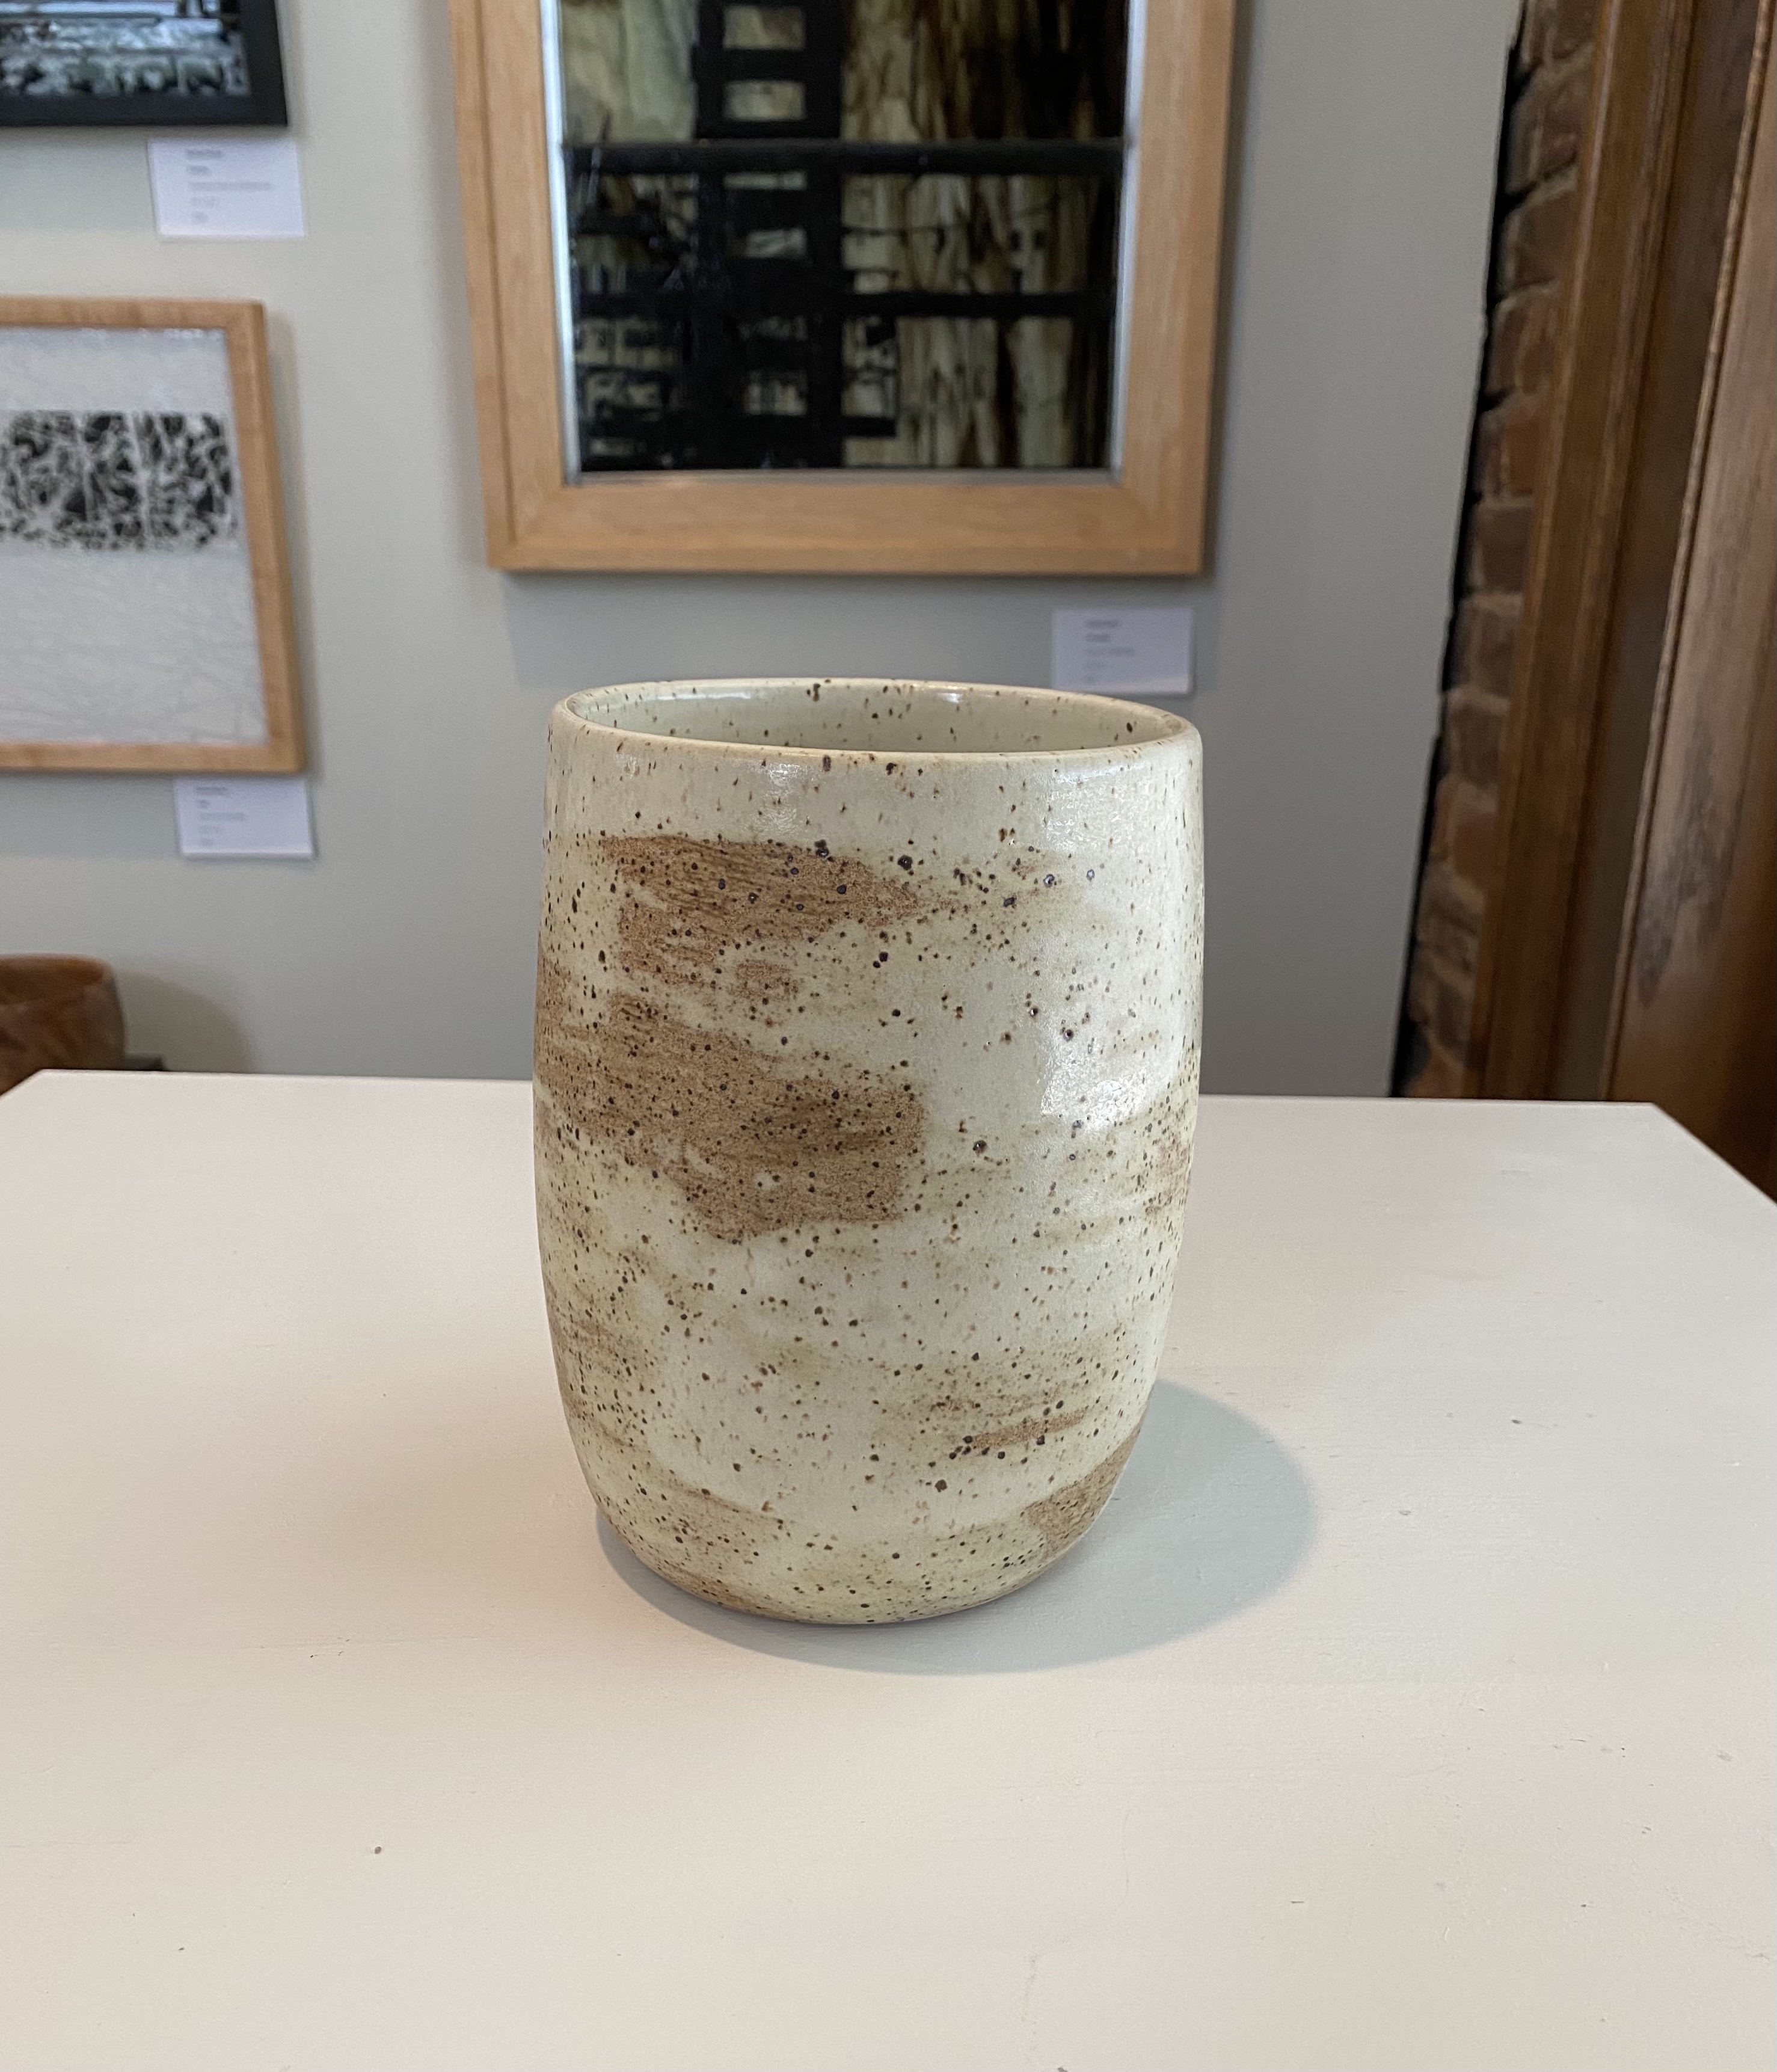 Vase/Vessel
Ceramic
6 1/2"
$30.